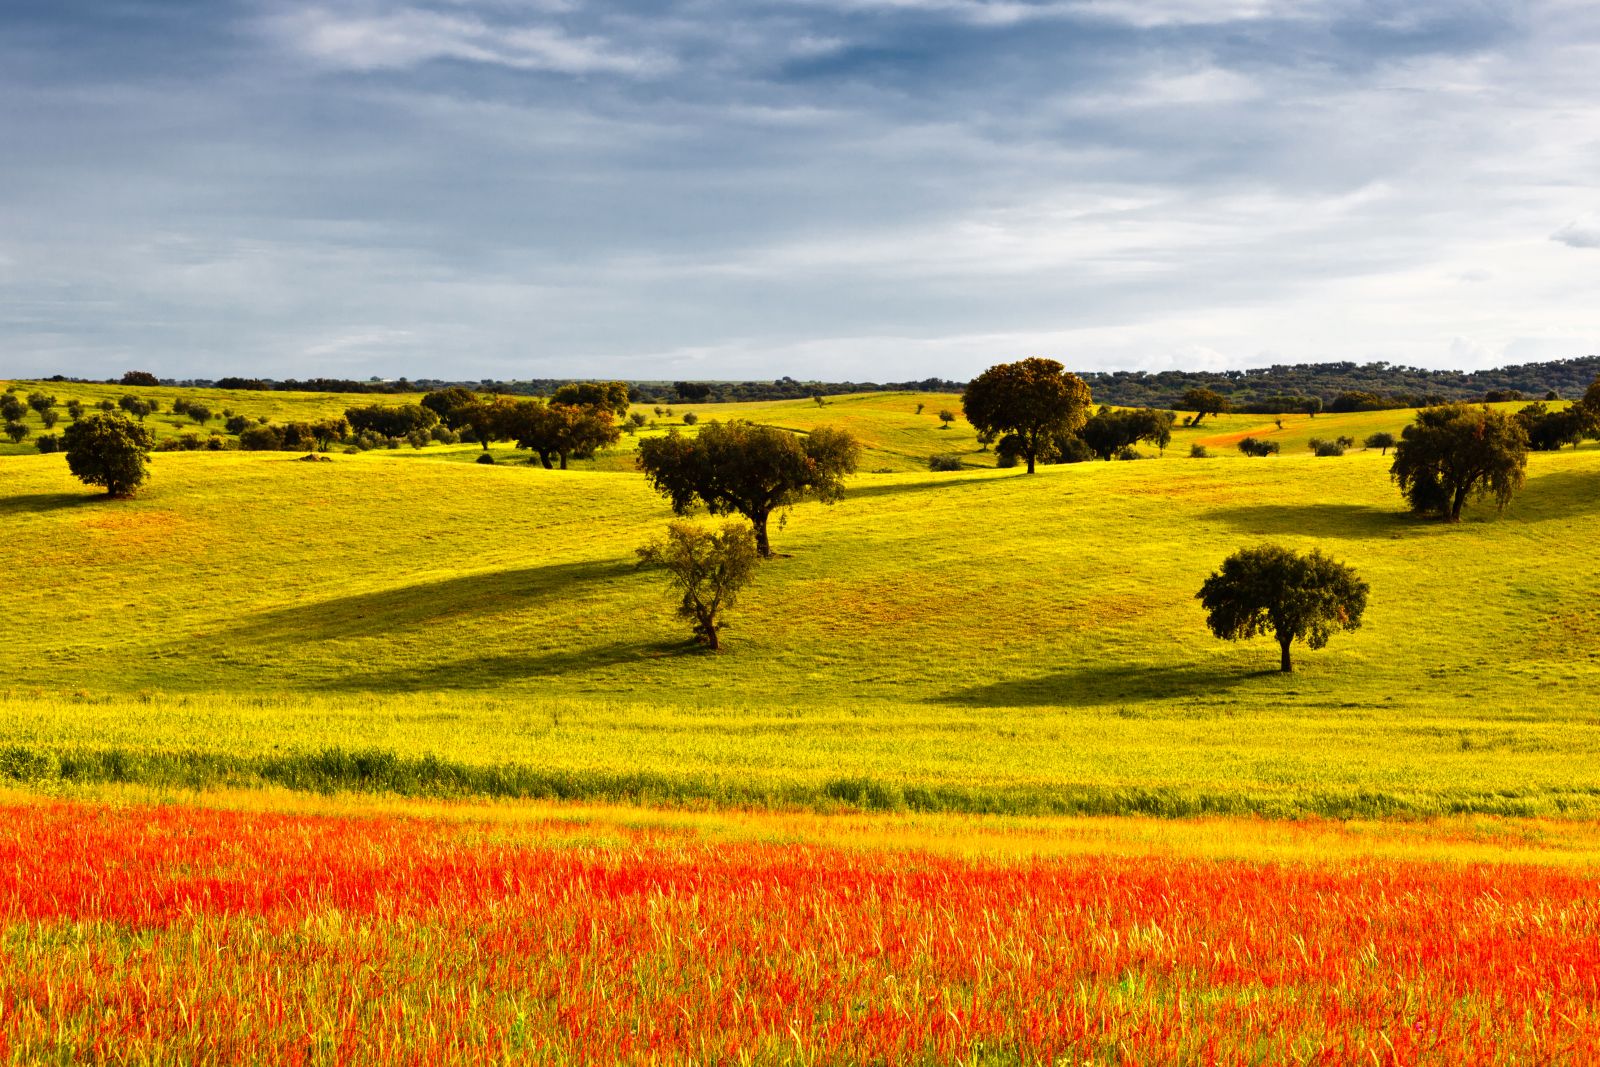 Wildlflowers in the meadows in the Alentejo region of Portugal